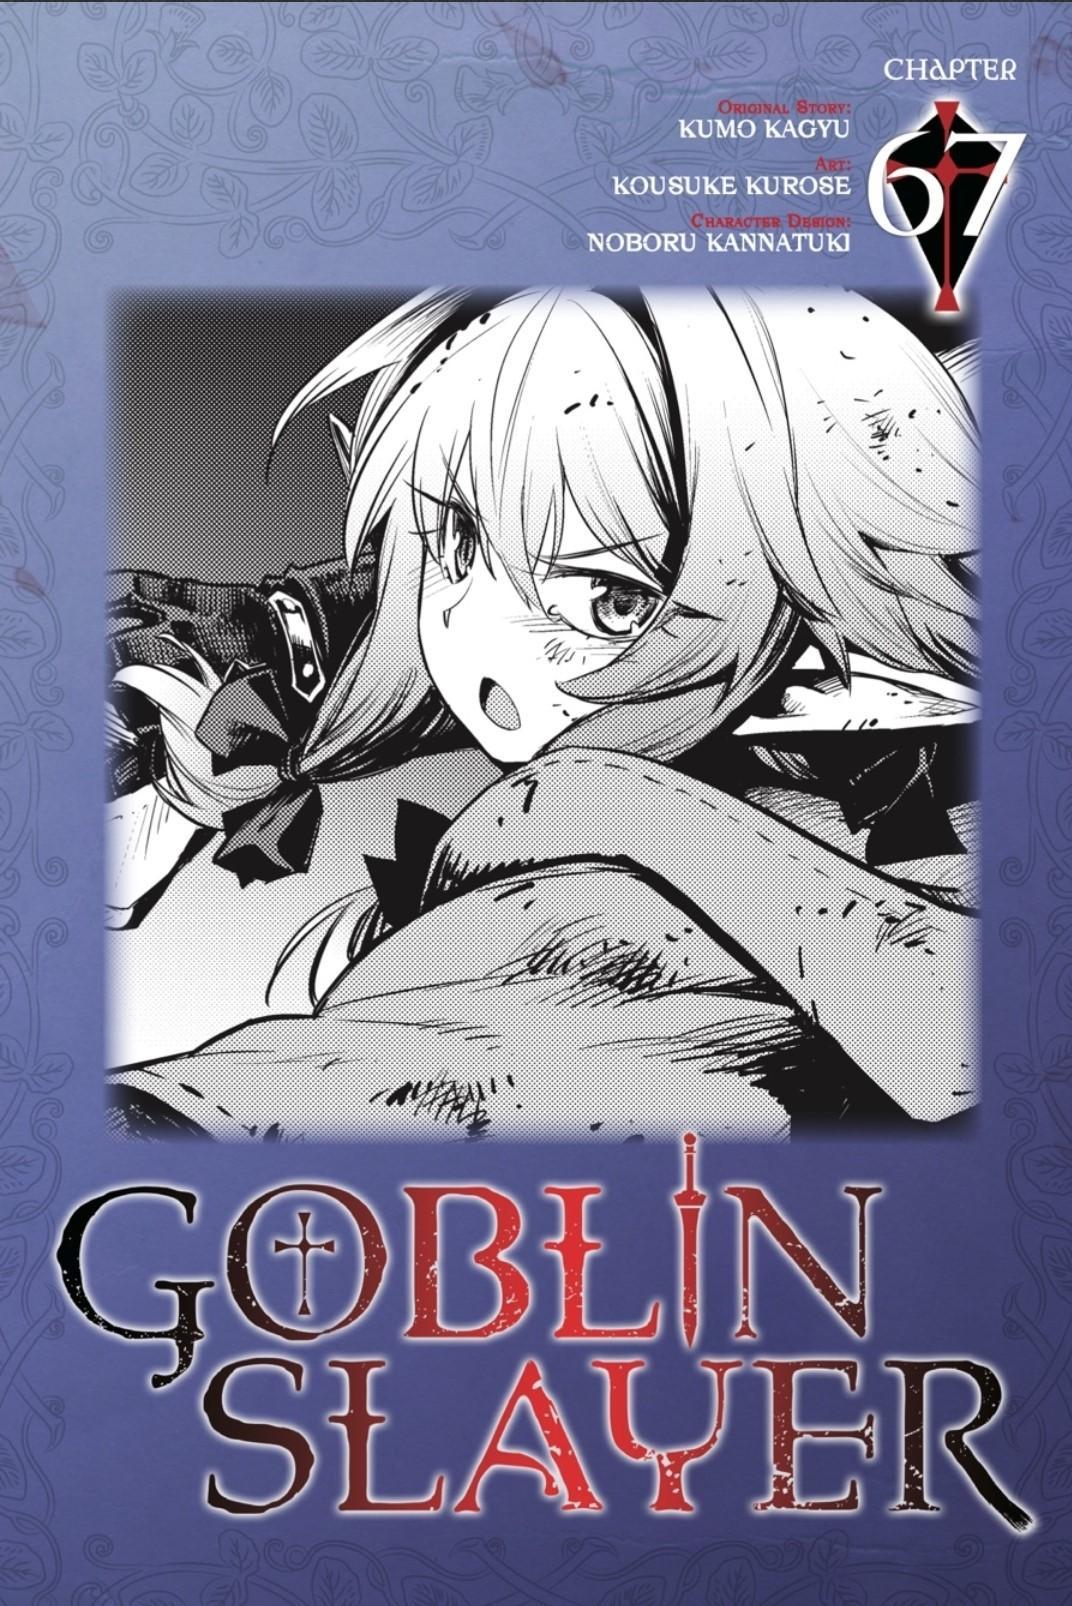 Goblin slayer read